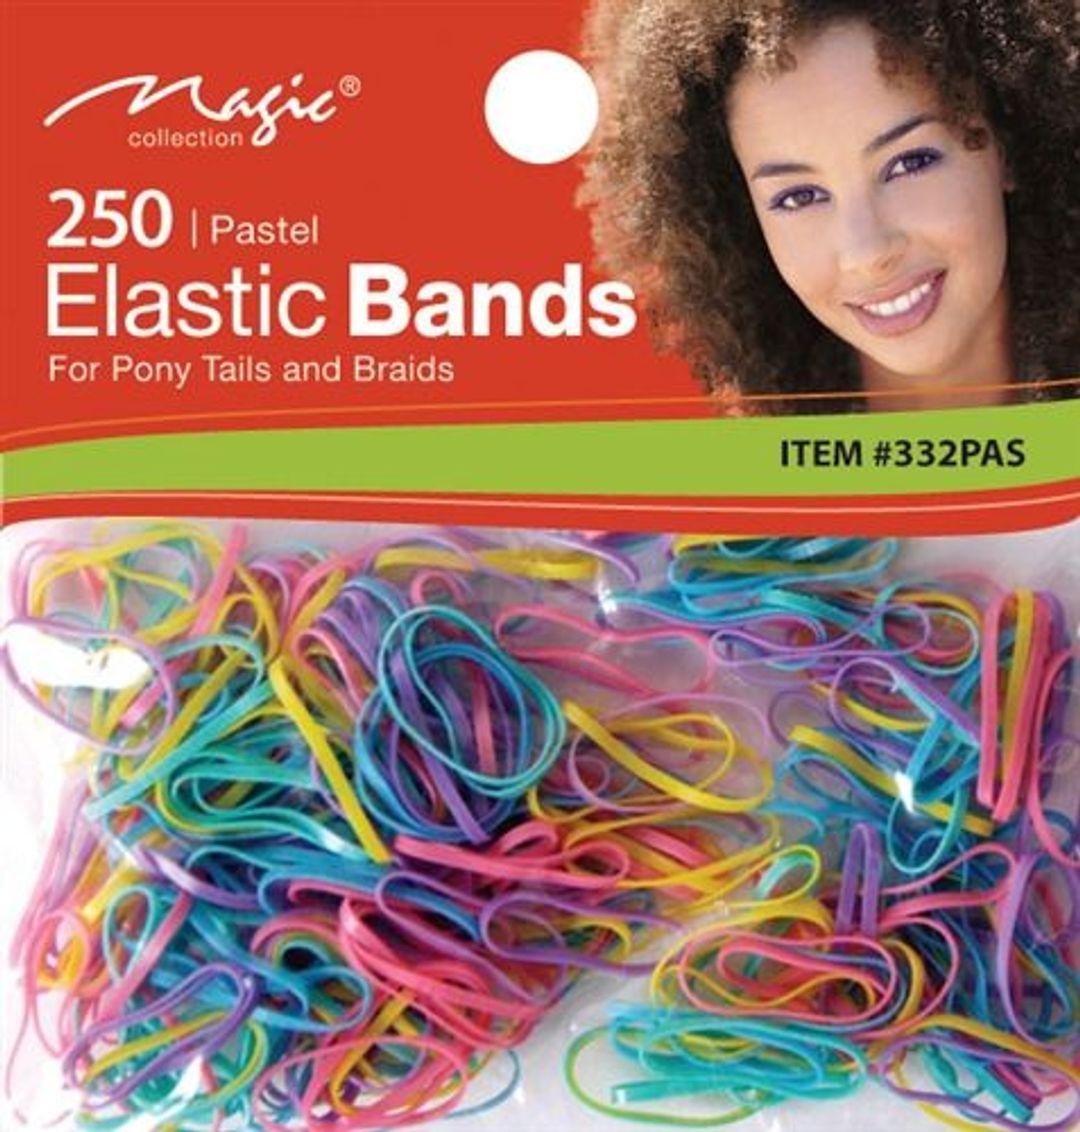 Magic Collection 250 Elastic Bands Pastal - 332